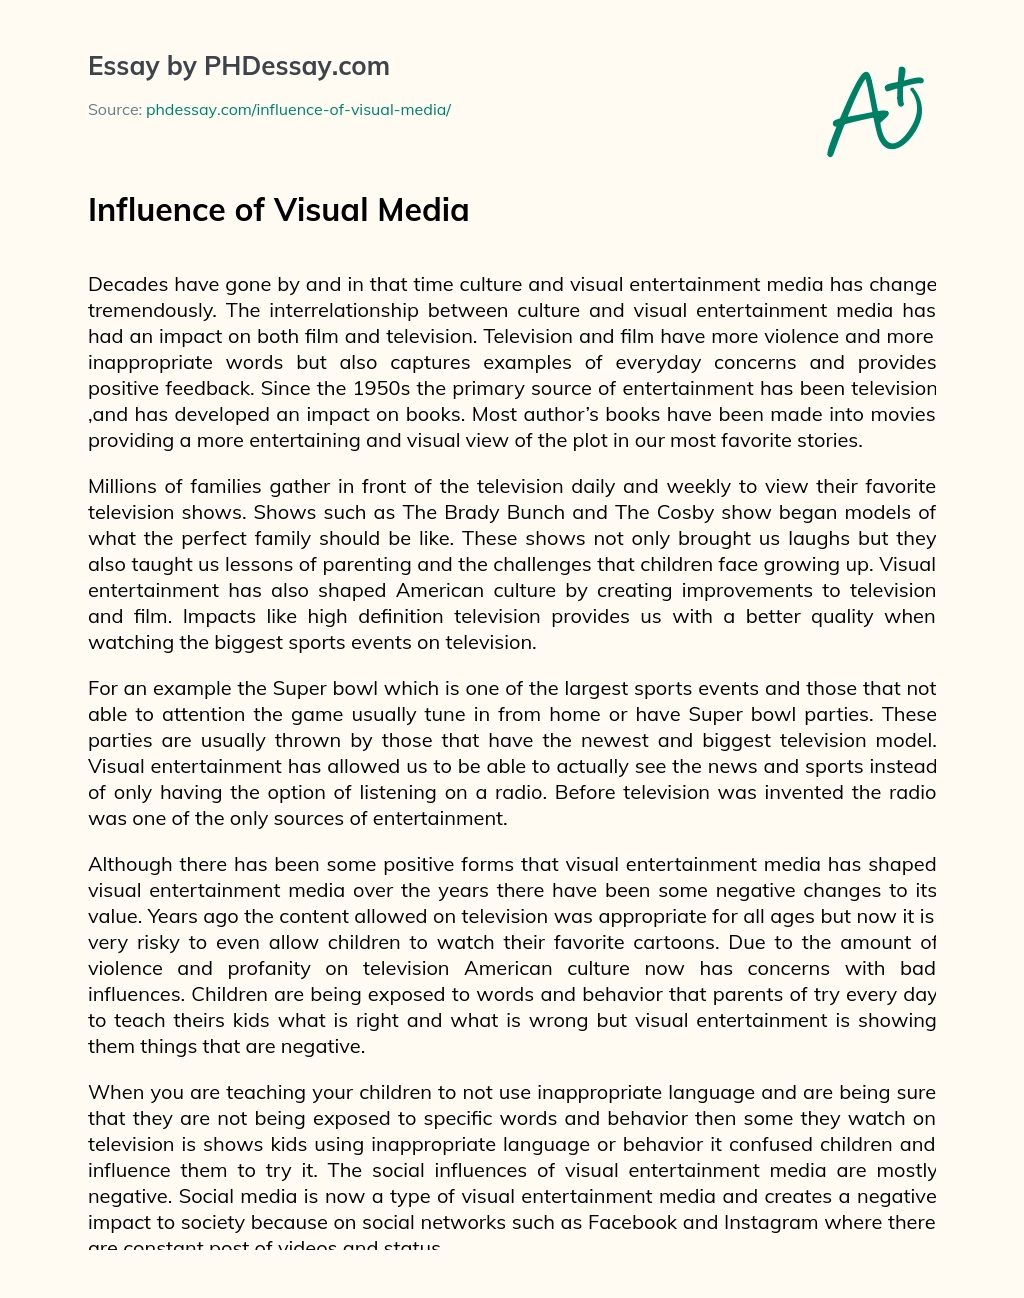 Influence of Visual Media essay